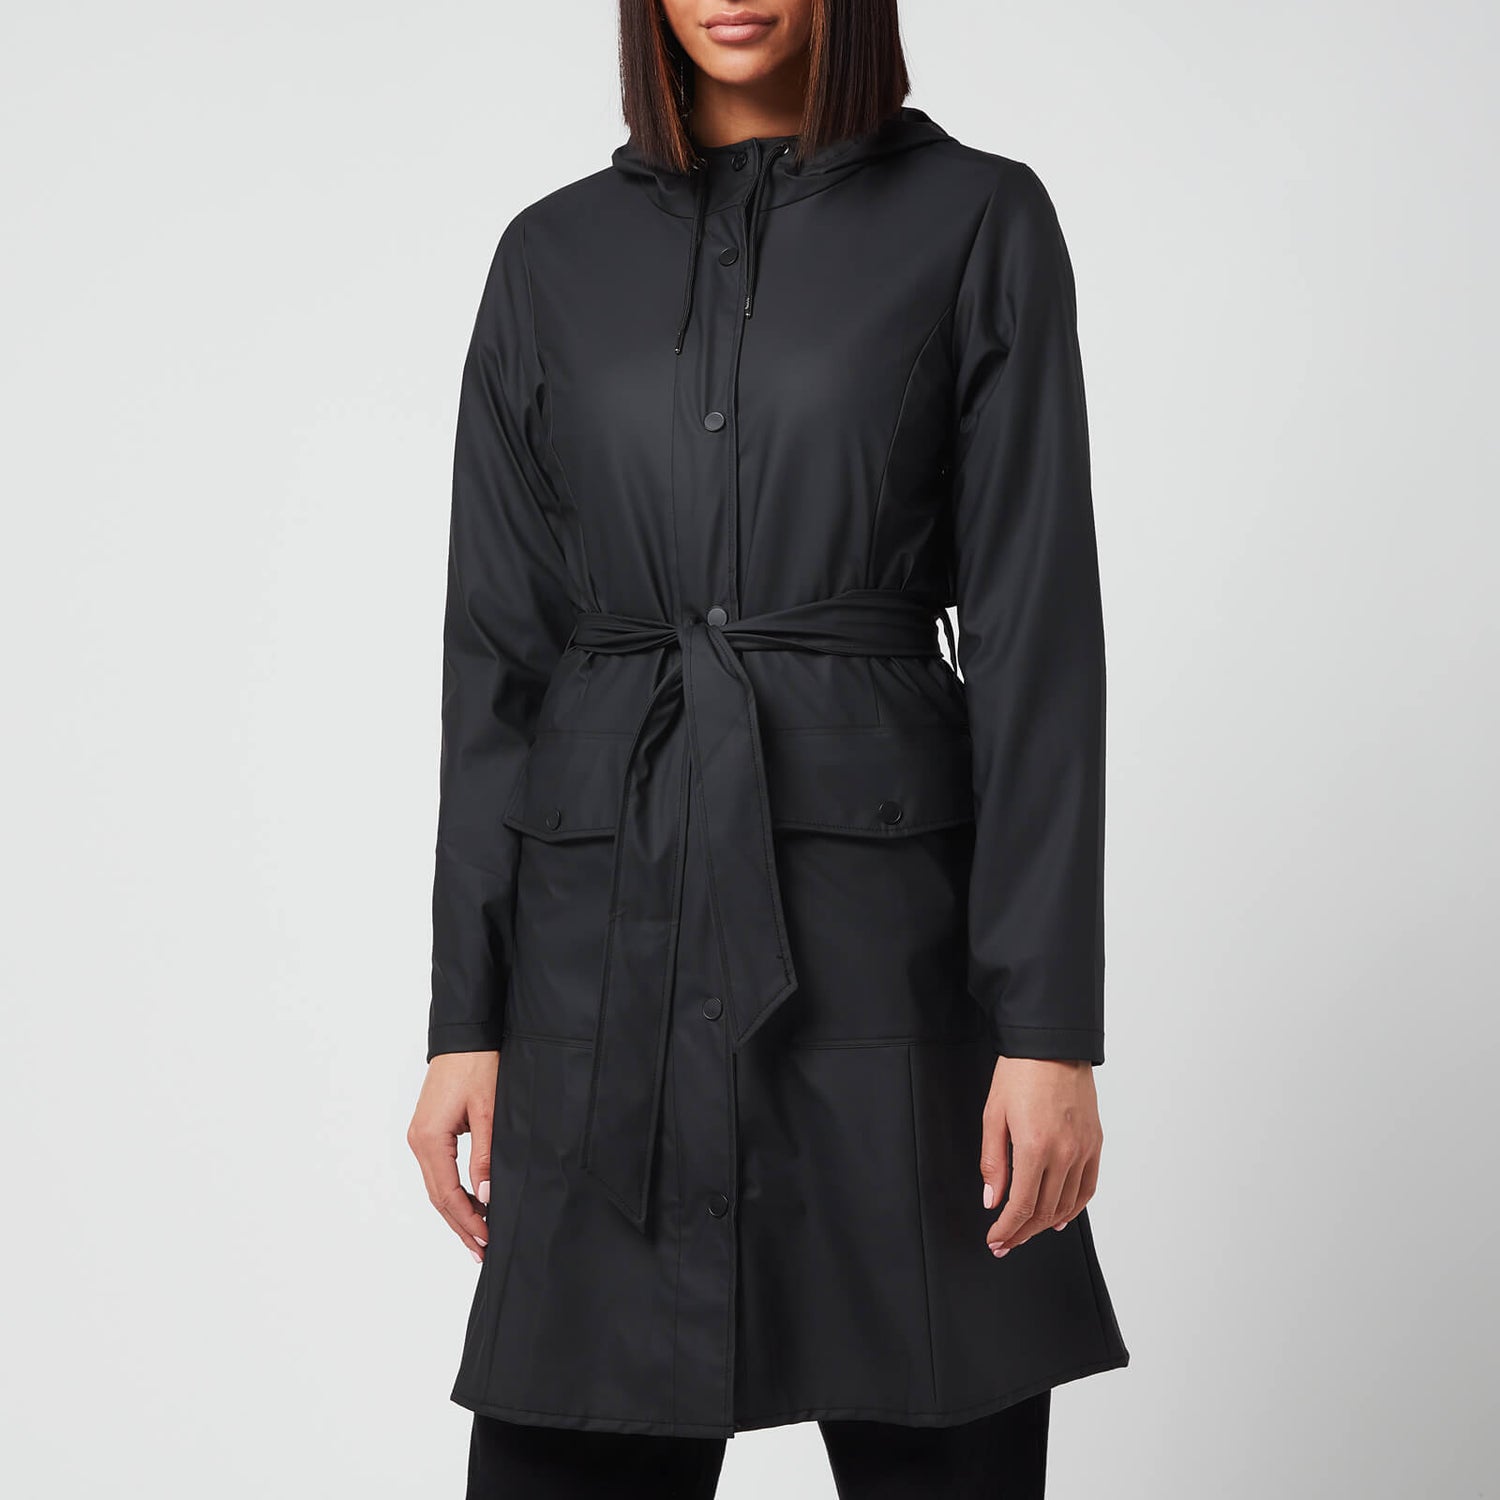 RAINS Women's Curve Jacket - Black - XS